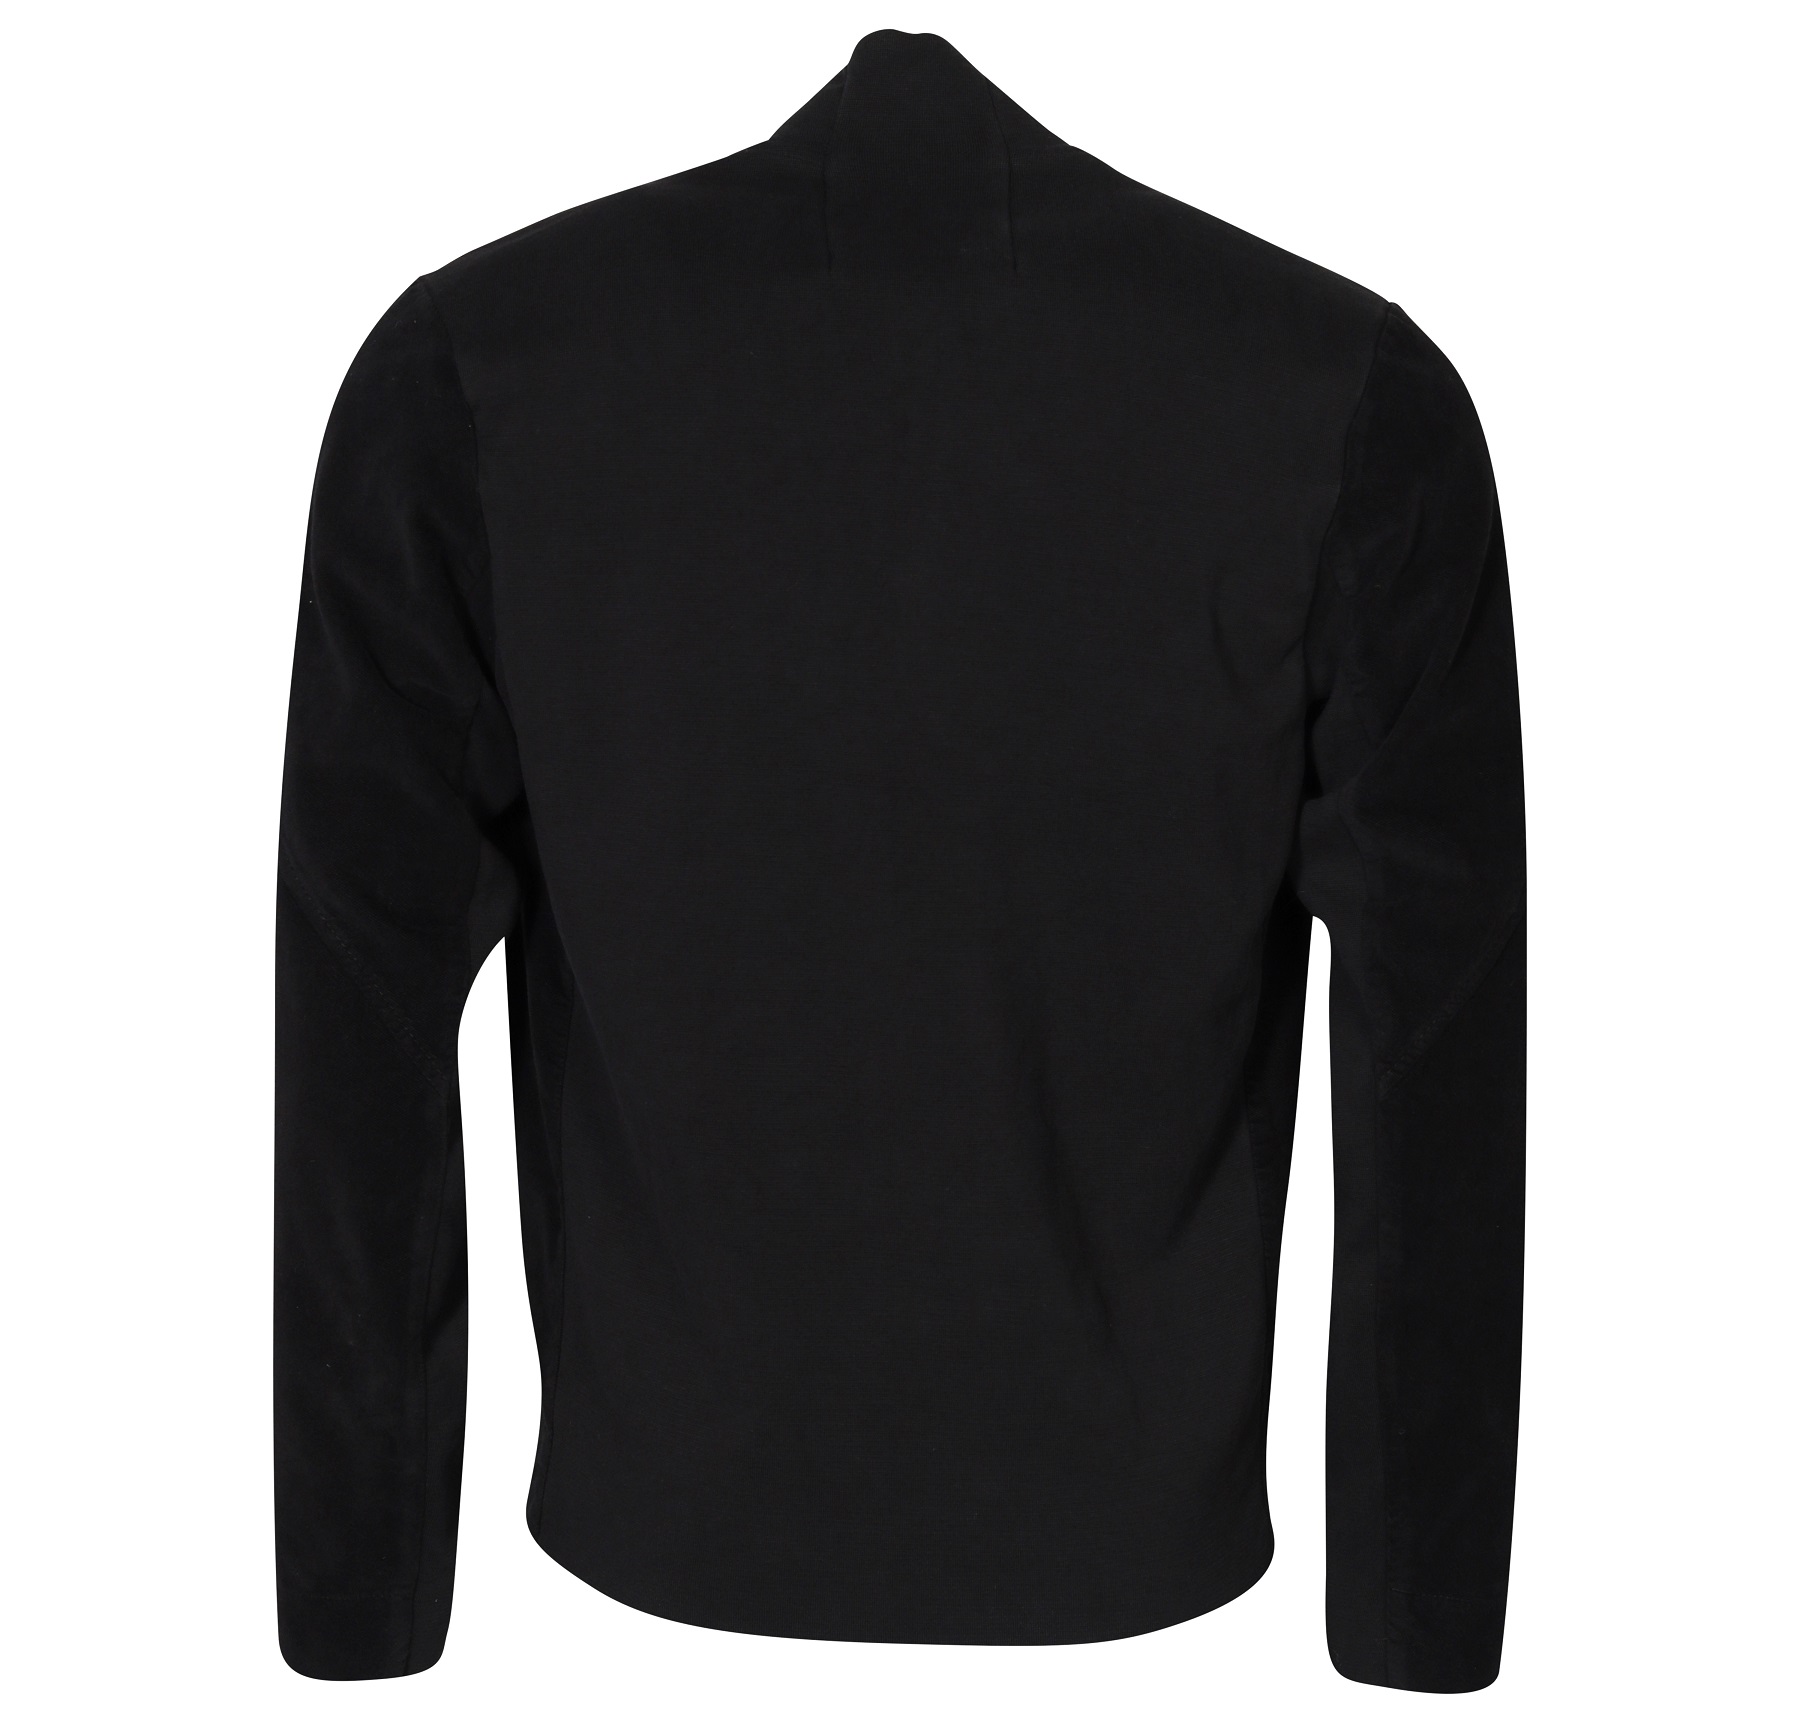 TRANSIT UOMO Cotton Stretch Jacket in Black XL